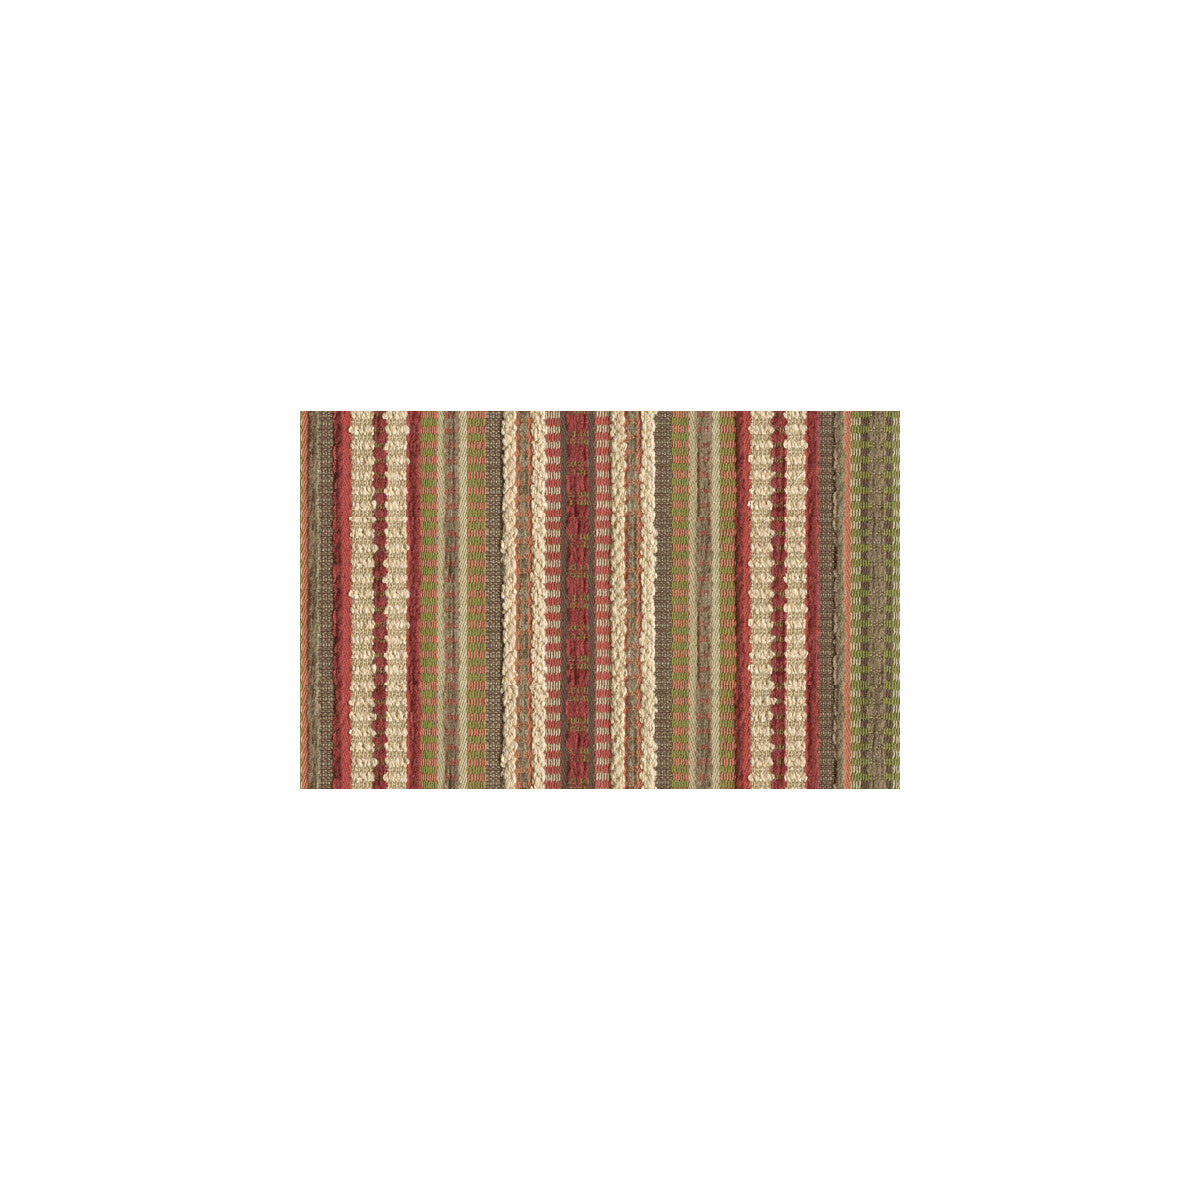 Kravet Design fabric in 31429-916 color - pattern 31429.916.0 - by Kravet Design in the Gis collection